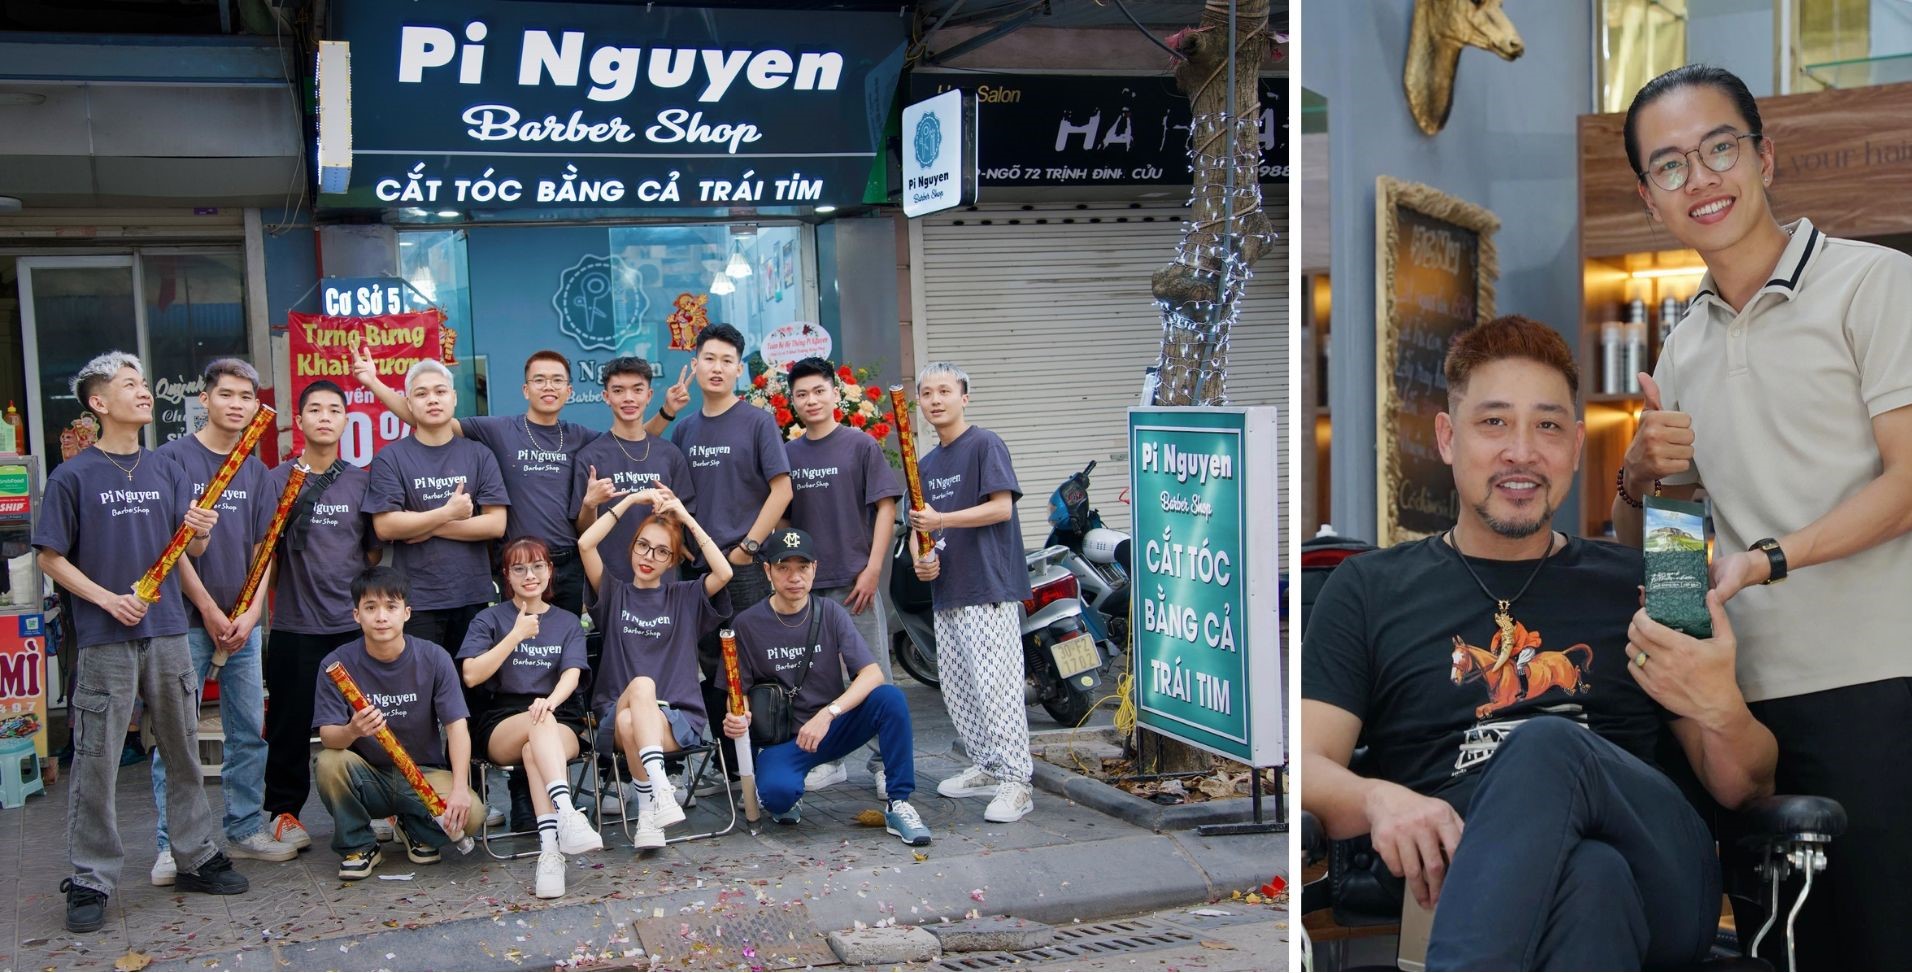 Pi Nguyen Barbershop